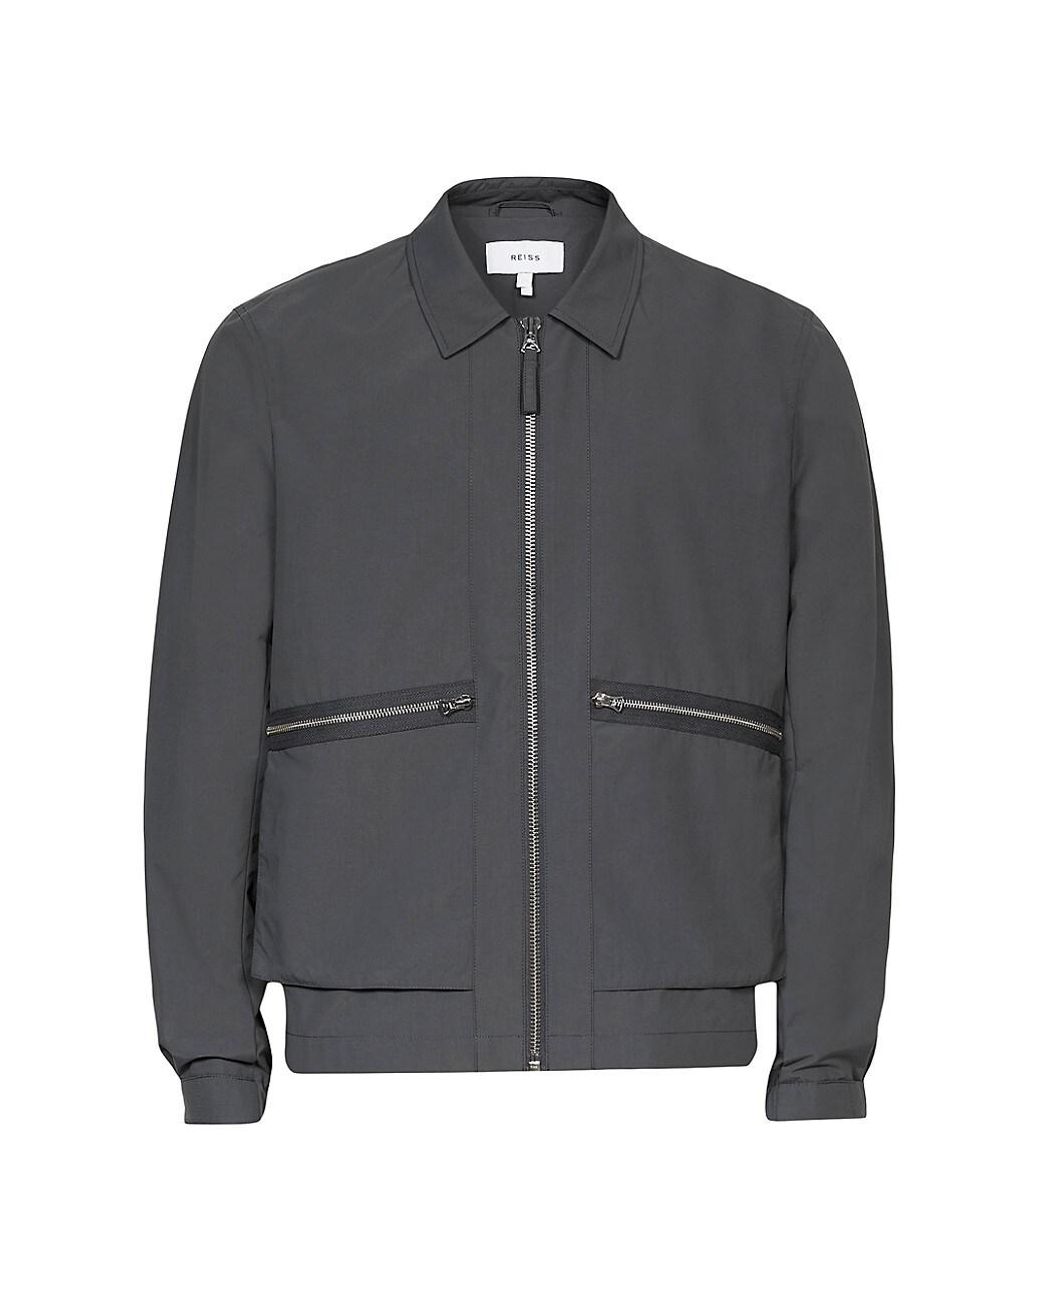 Reiss Synthetic Fival Nylon Jacket in Gray for Men | Lyst